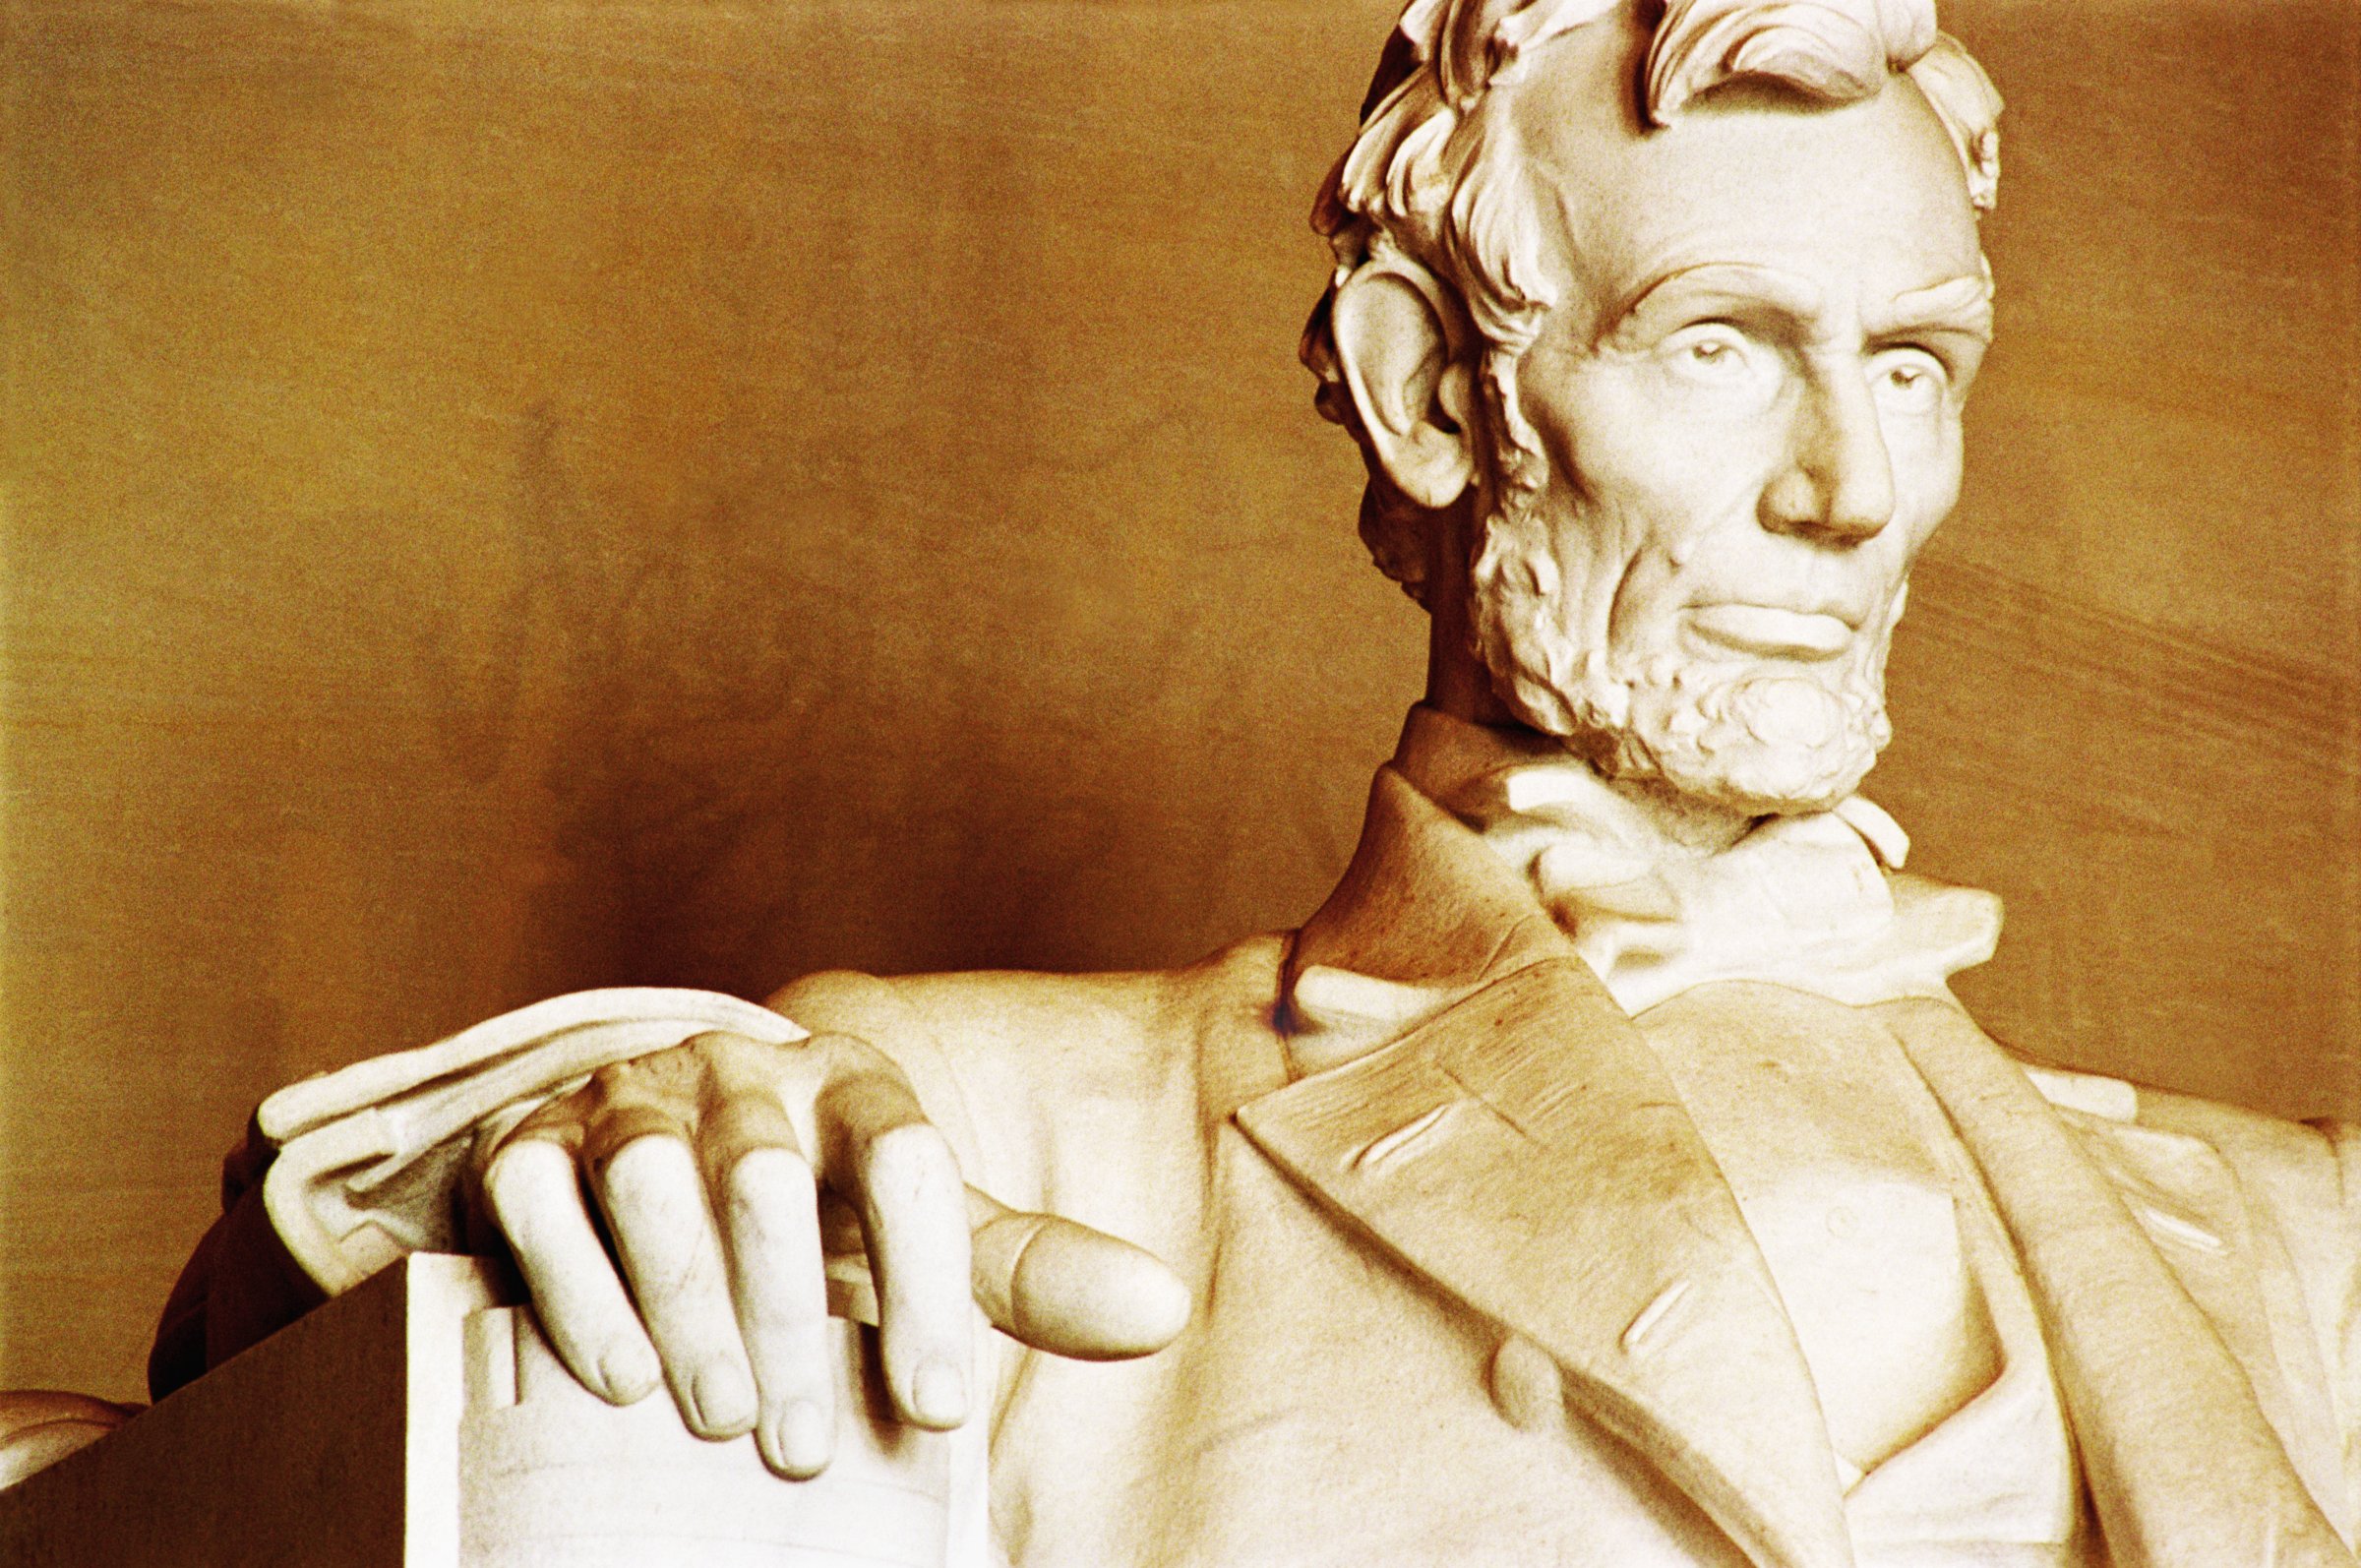 USA, Washington D.C., Lincoln Memorial statue, close-up